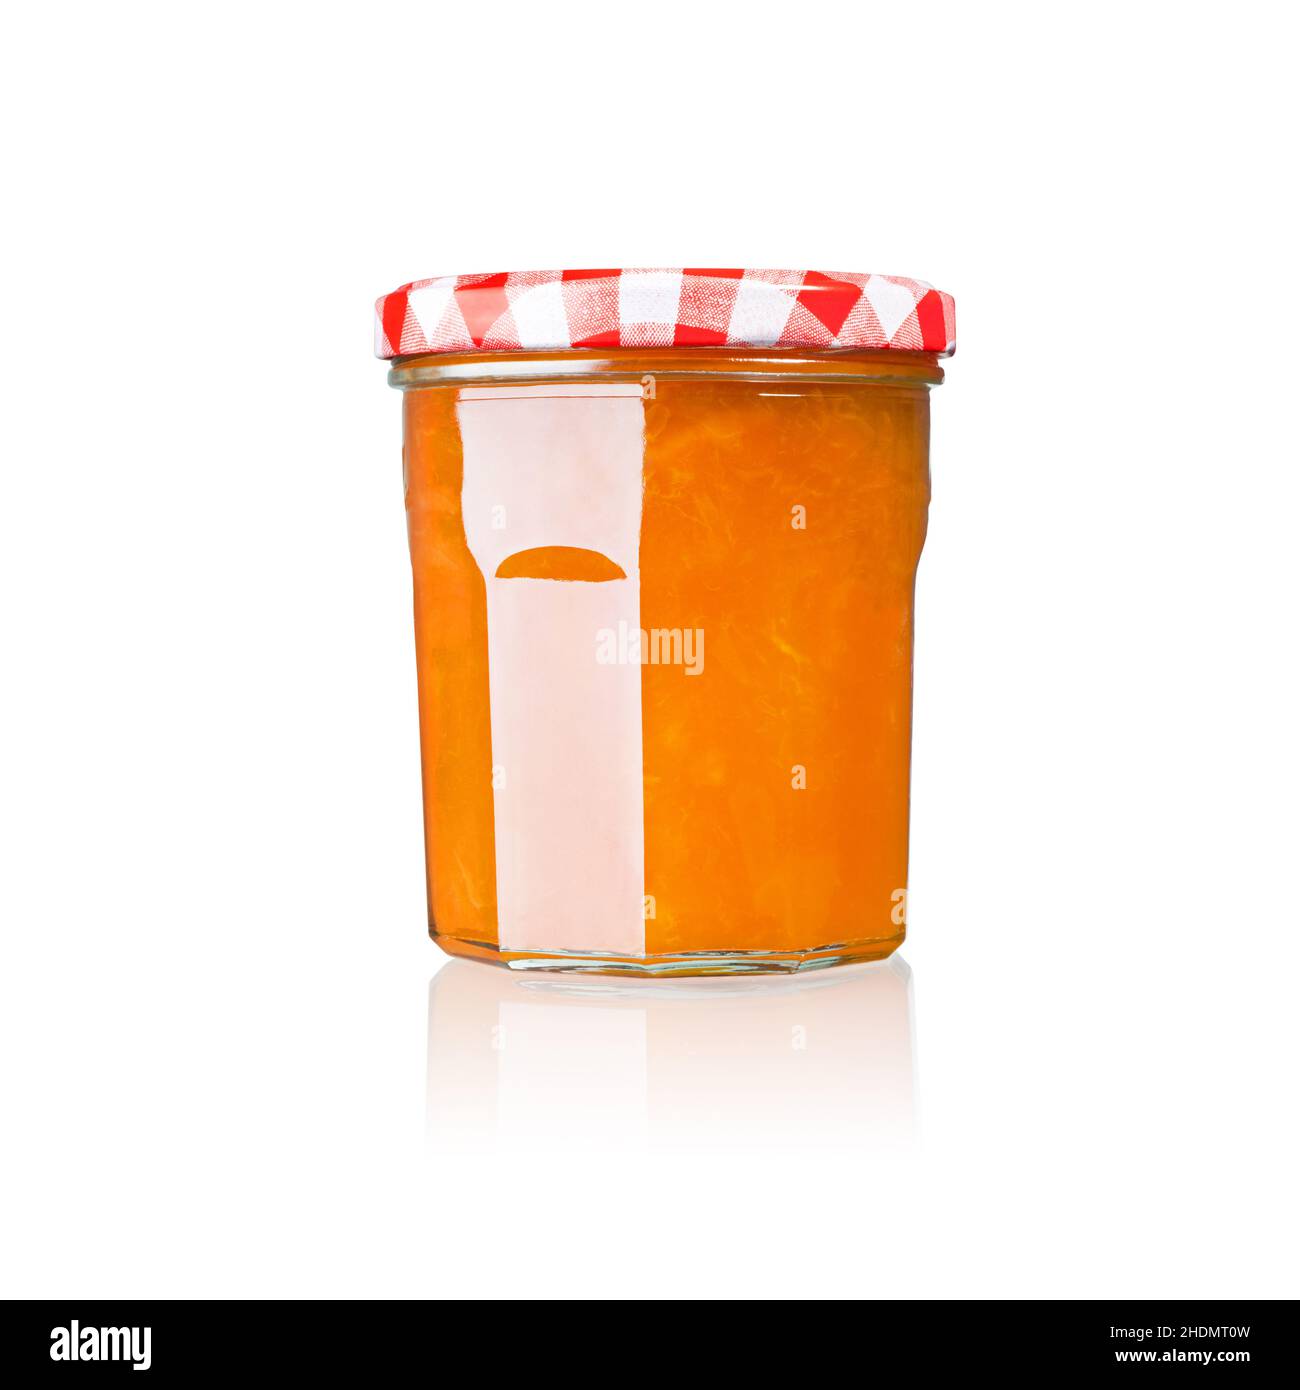 marmalade, preserves, apricot jam, marmalades, preserve, jams Stock Photo